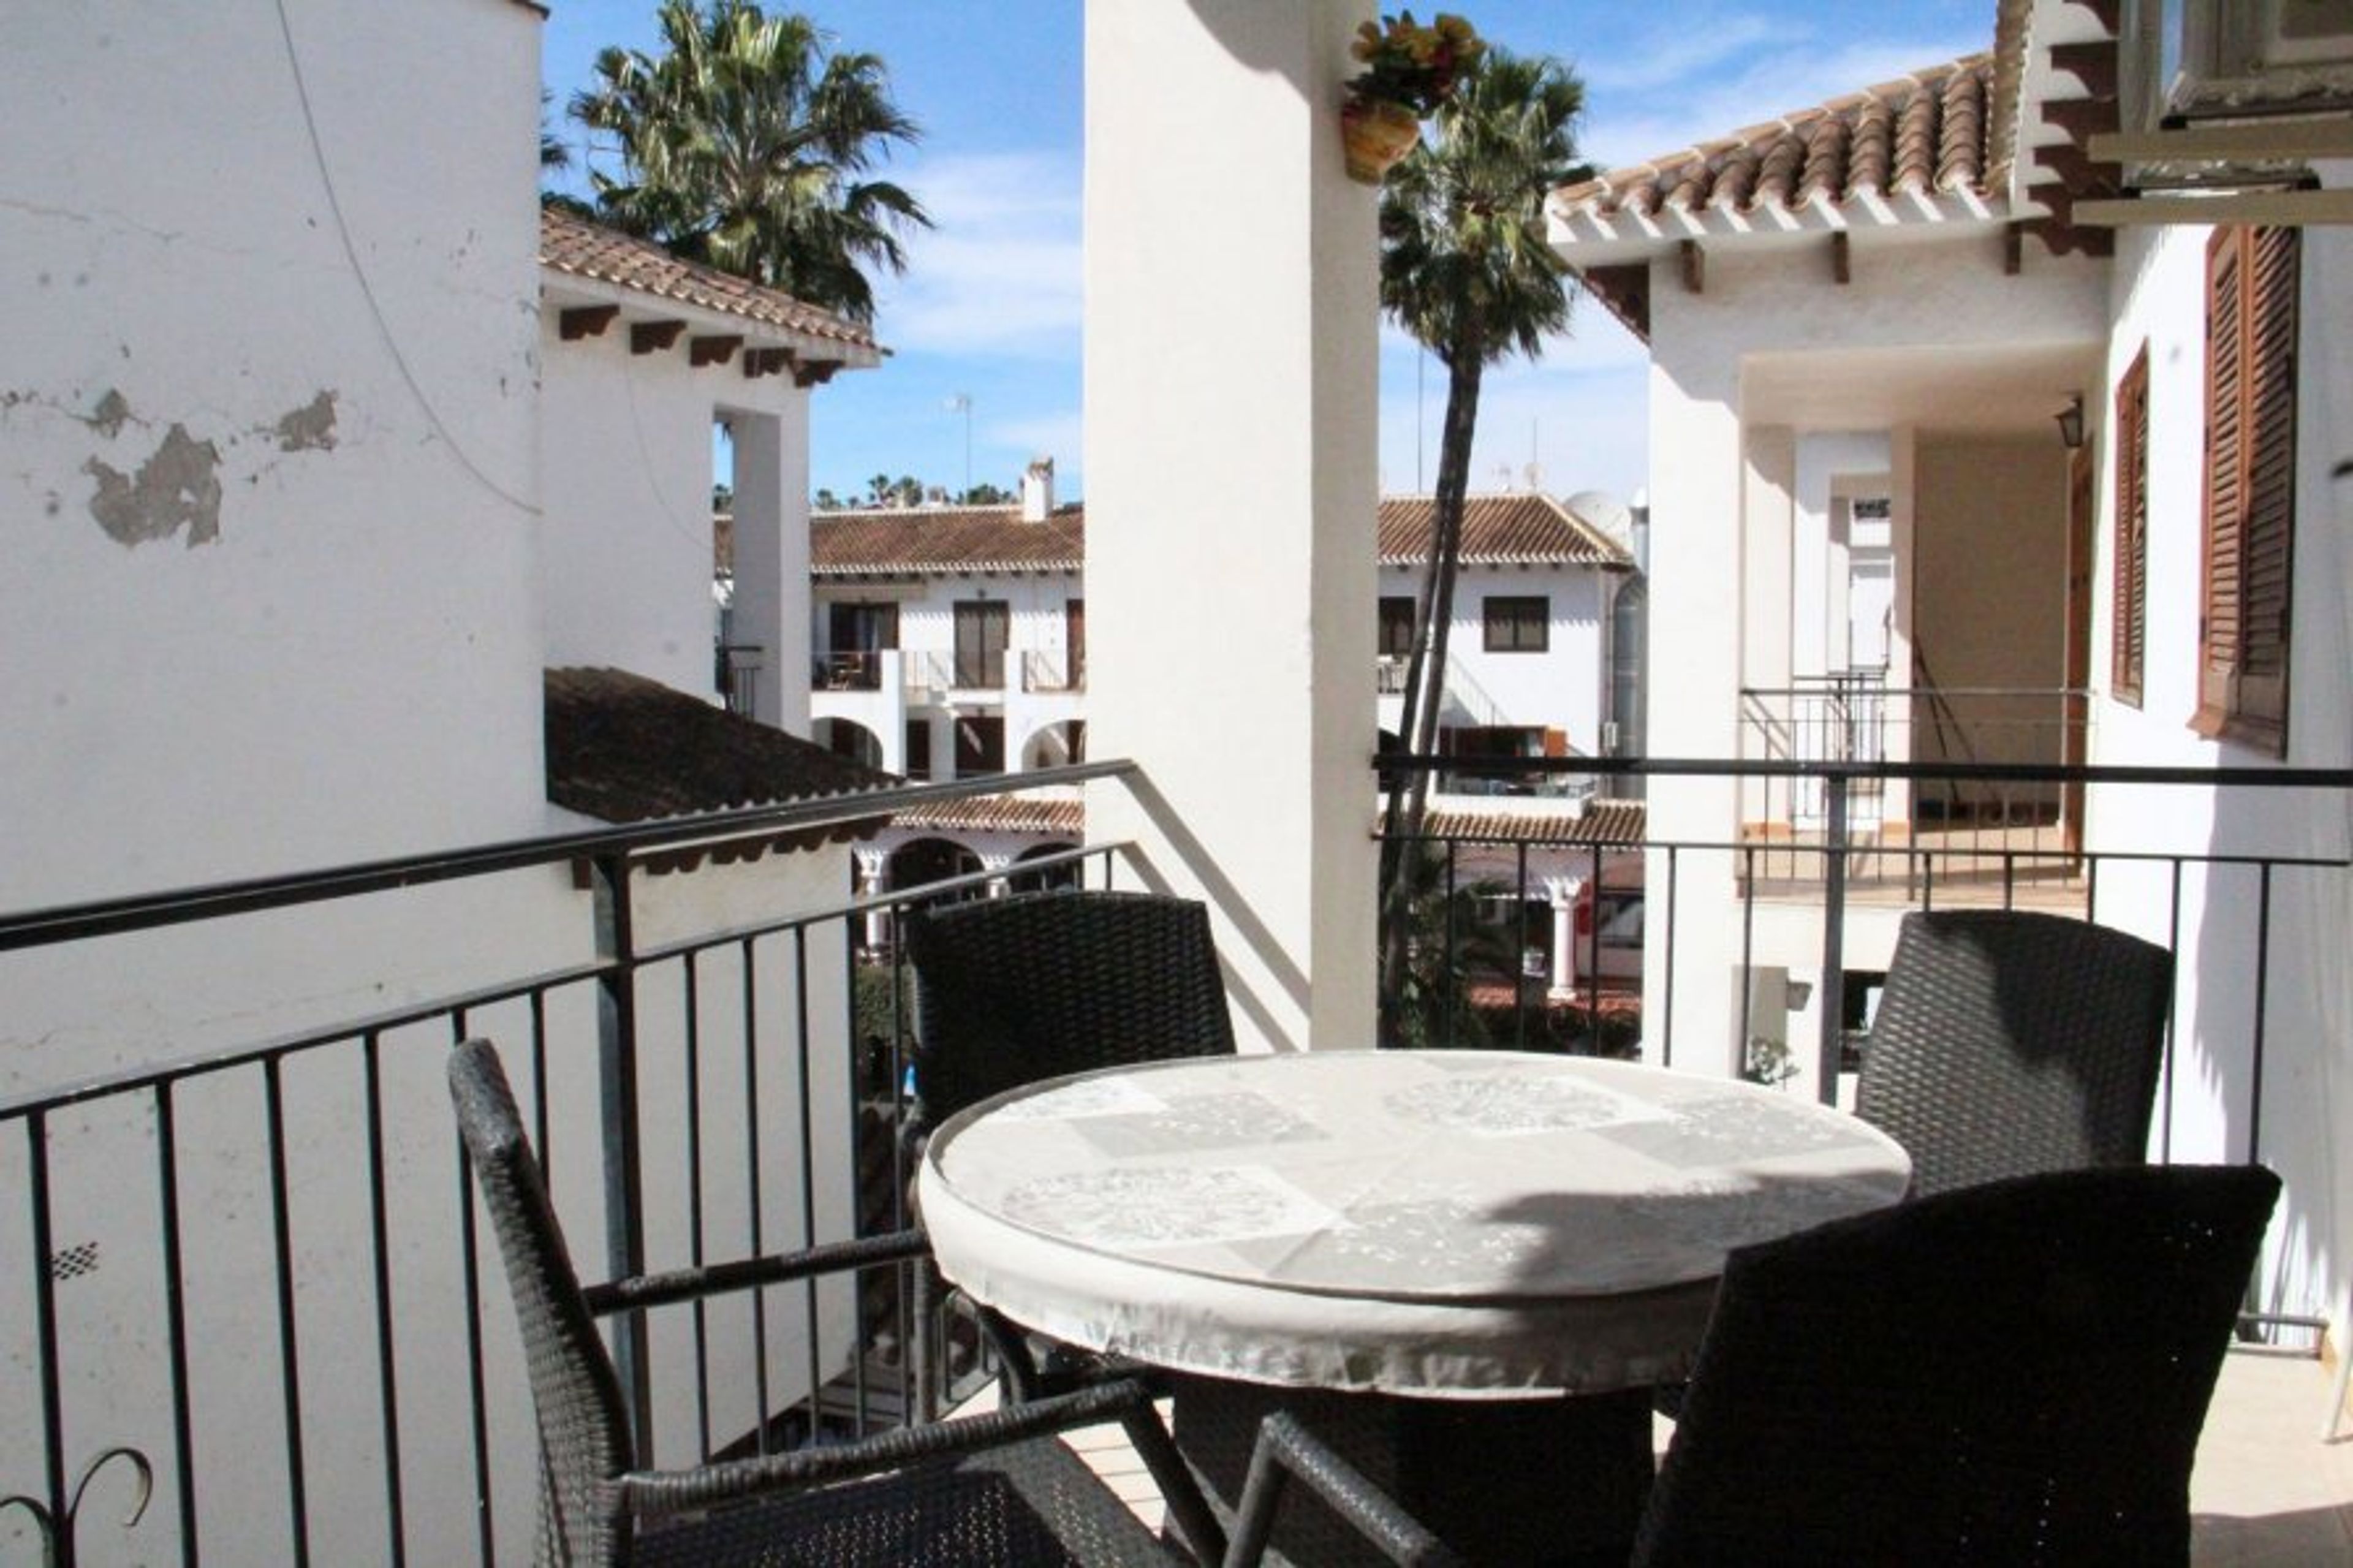 Lovely balcony to enjoy coffee or evening vino